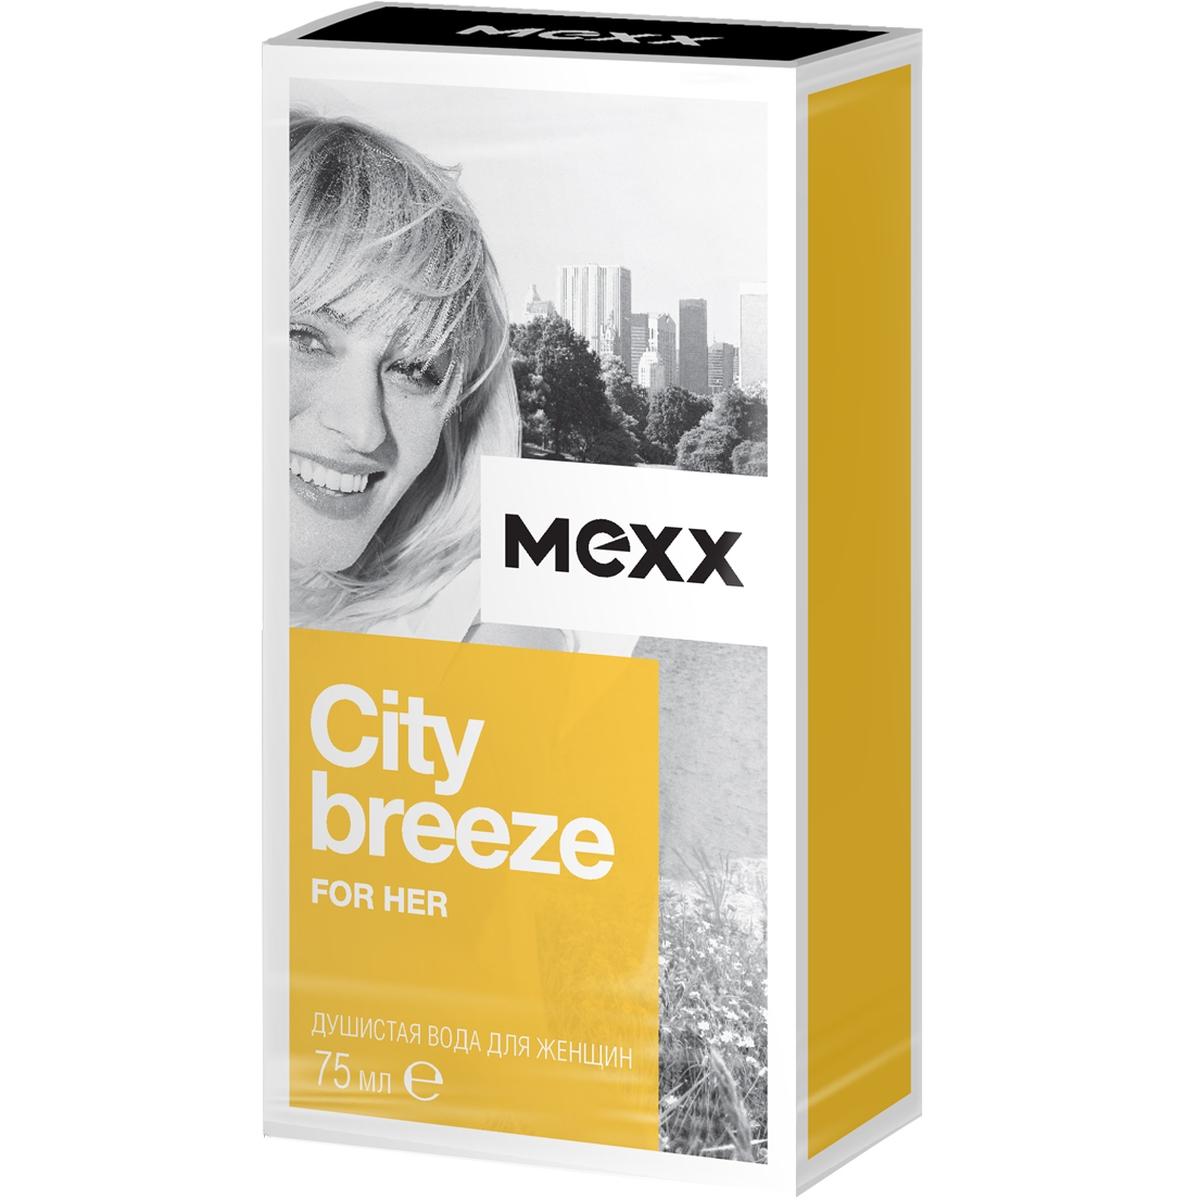 Душистая вода MEXX CITY BREEZE FOR HER 75 мл london portrait of a city